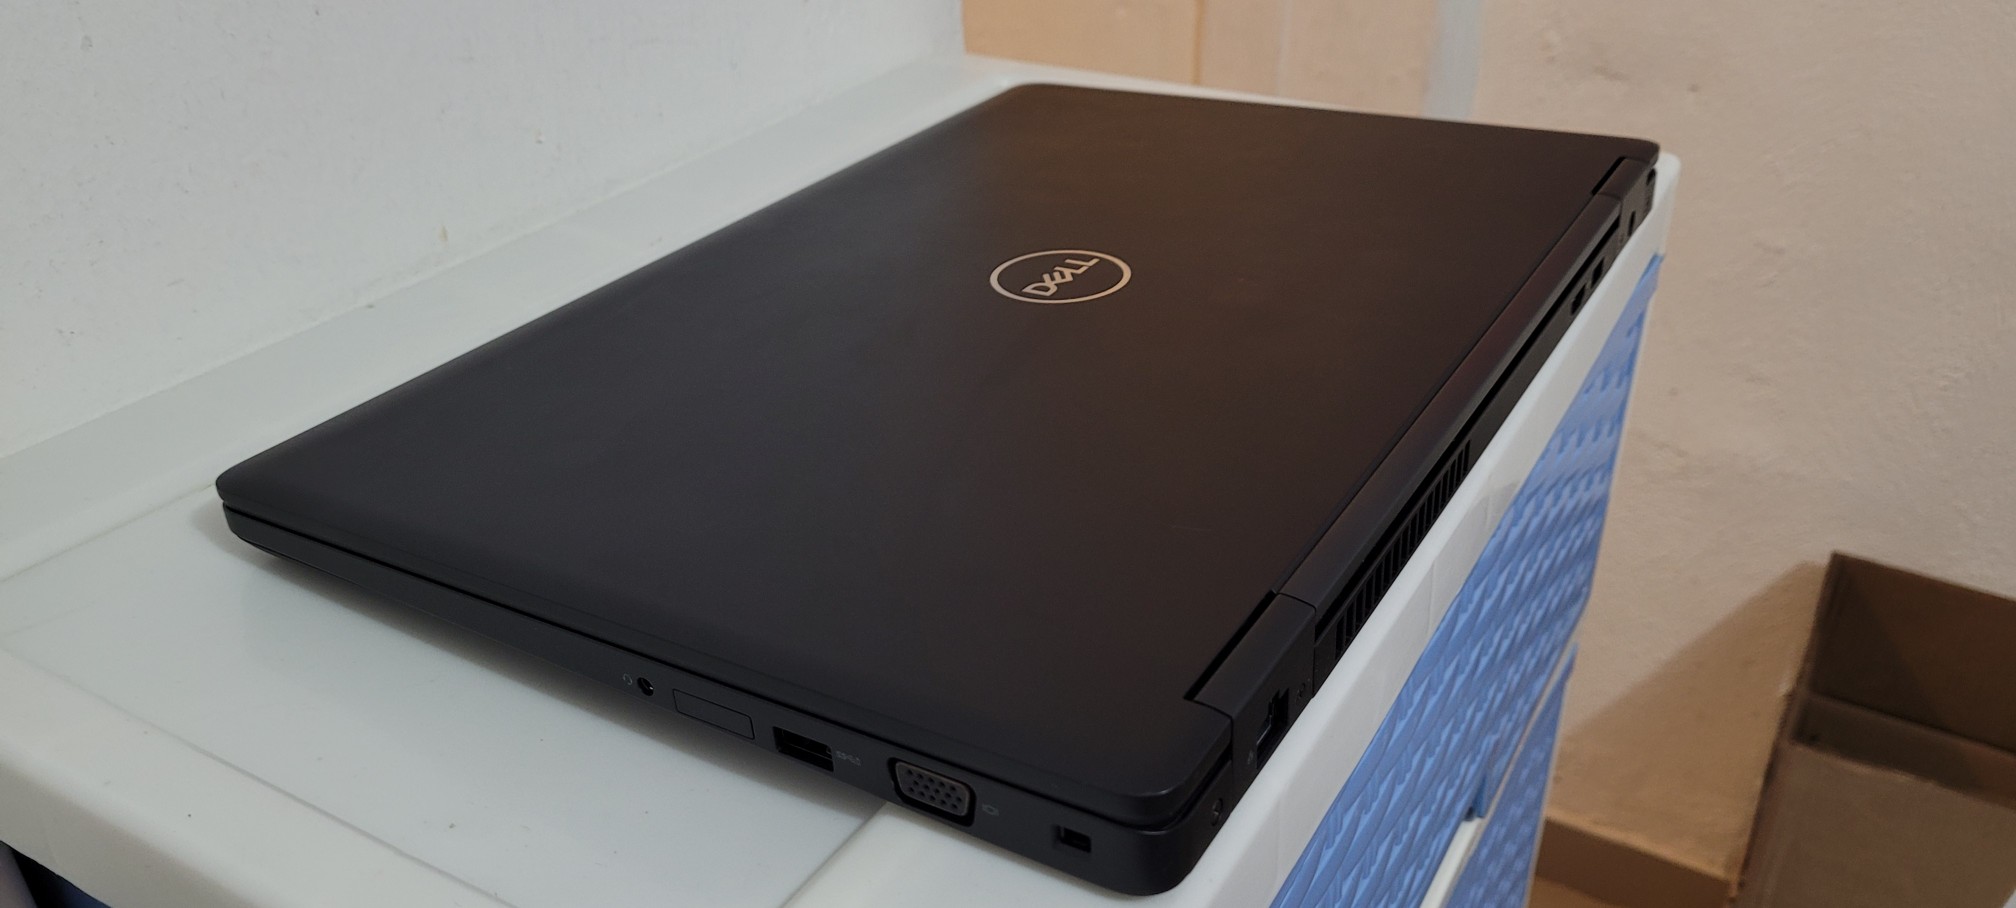 computadoras y laptops - Dell 5580 17 Pulg Core i5 7ma Gen Ram 8gb ddr4 Disco 256gb Solido hdmi 2